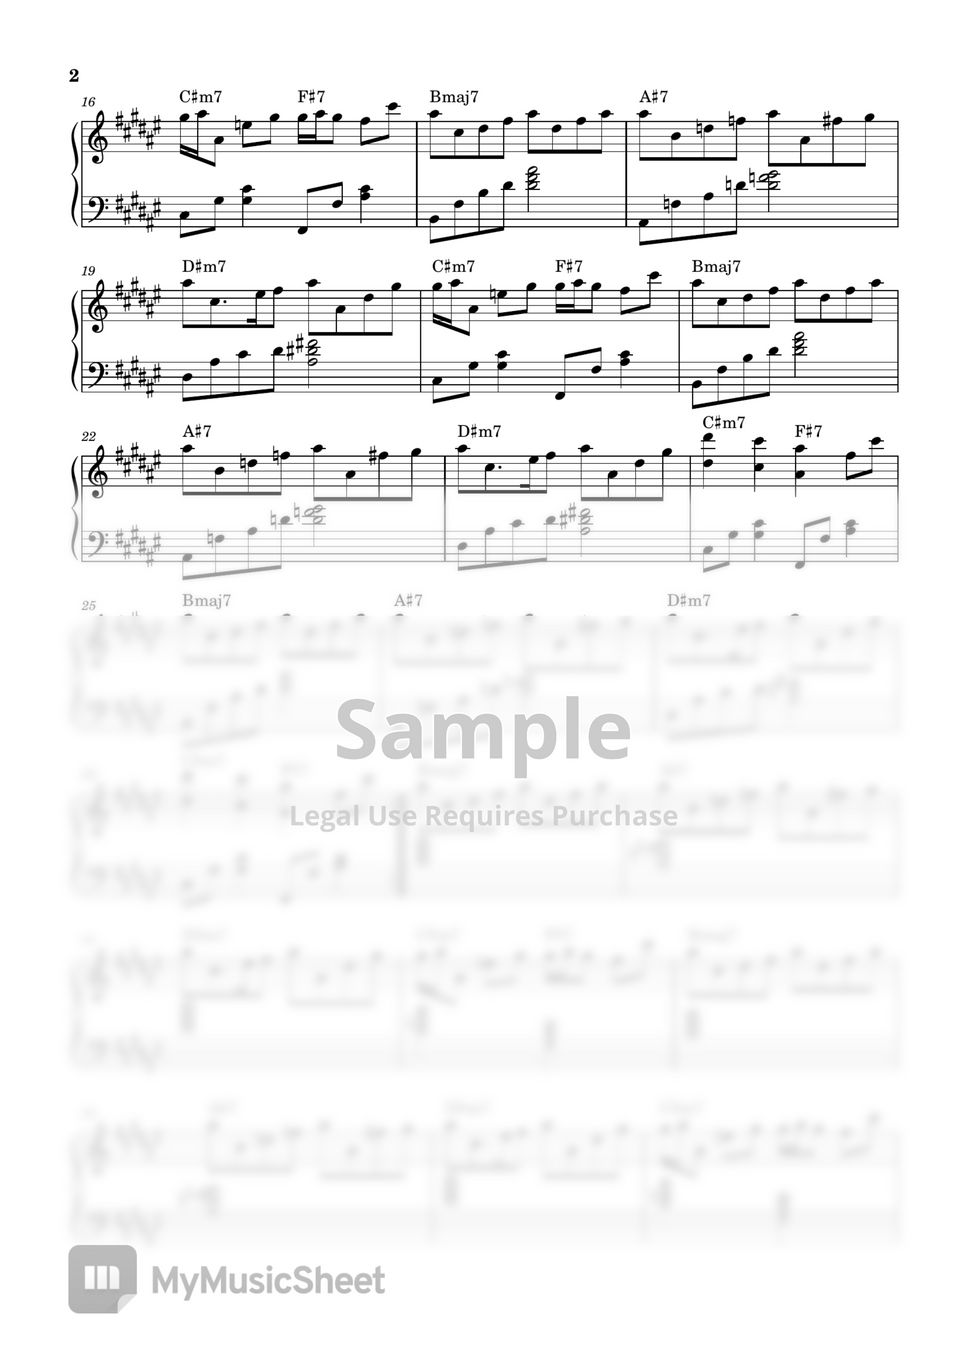 Minho - Chase (Piano accompaniment) by Leisure Piano Sheets YT